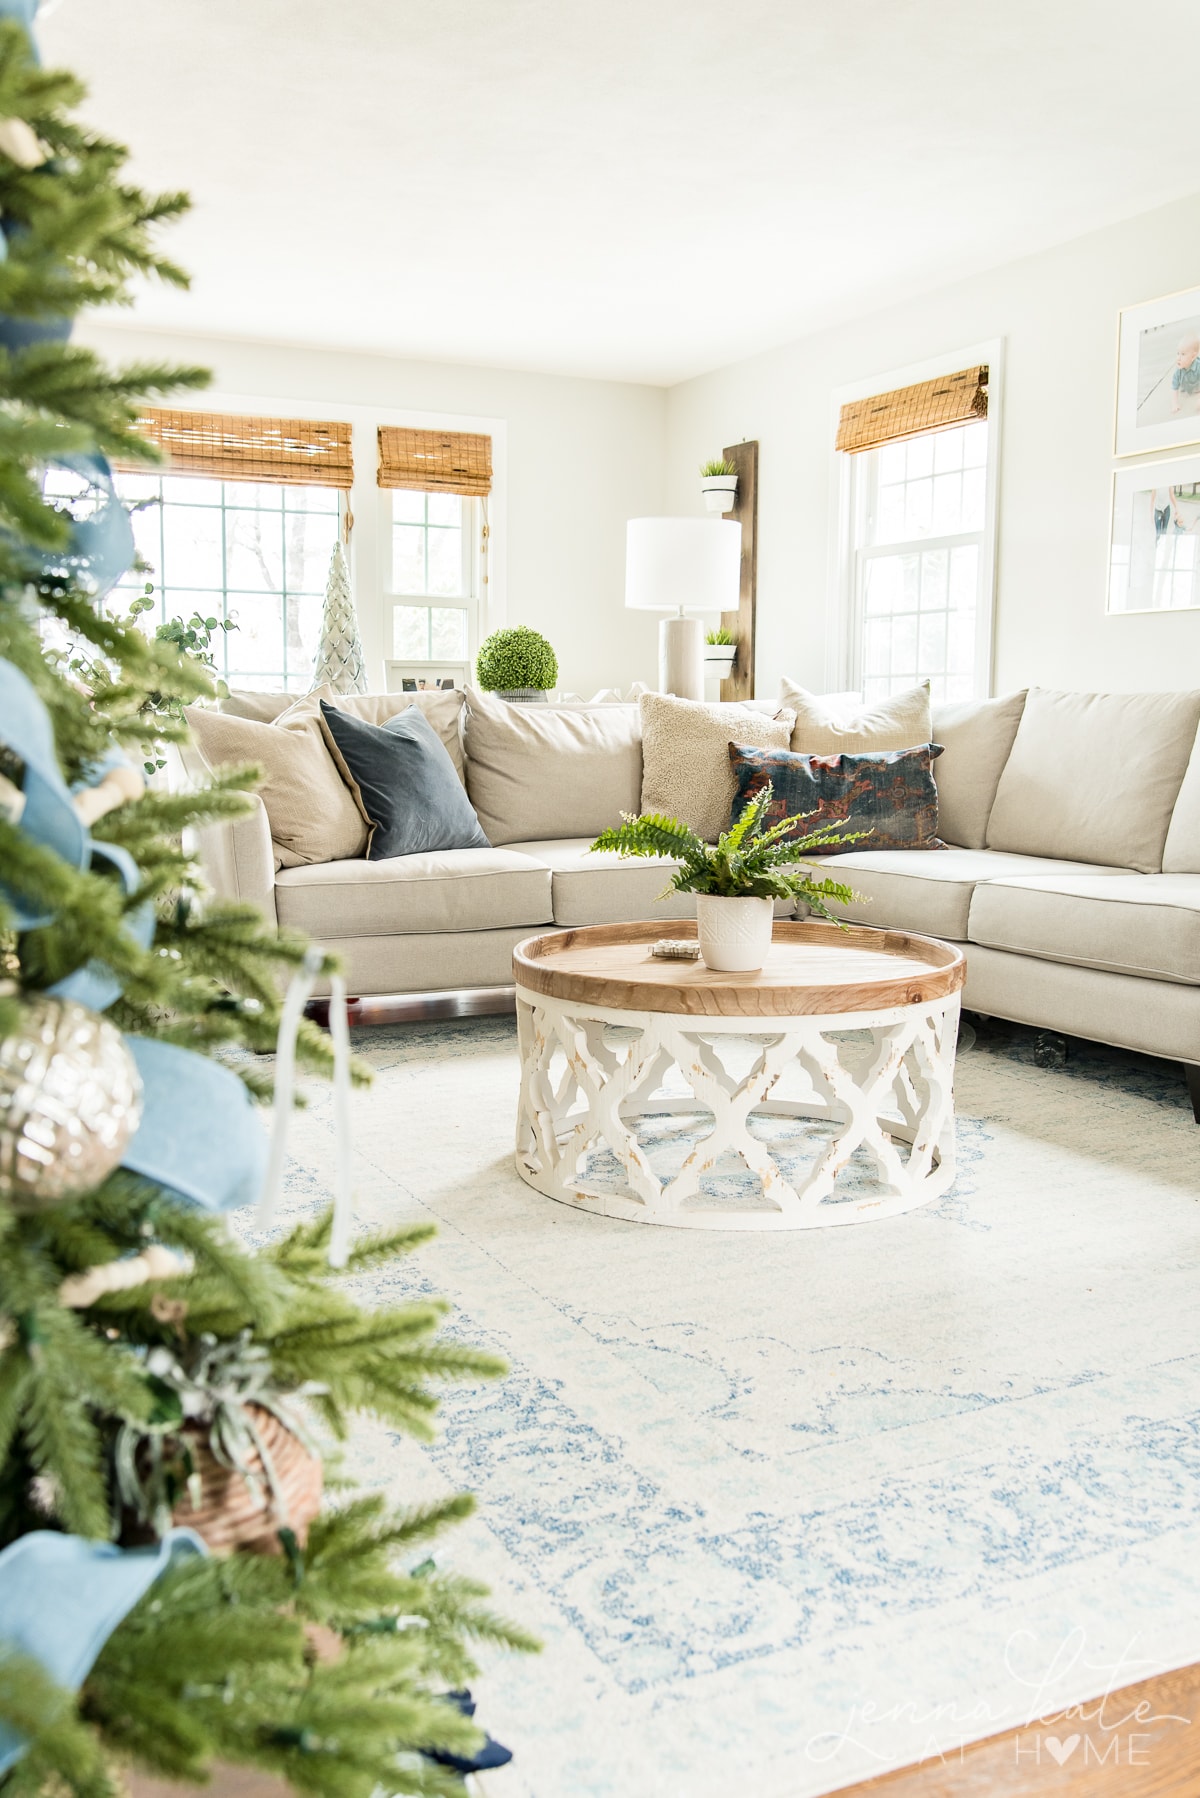 View of the living room peeking through the Christmas tree